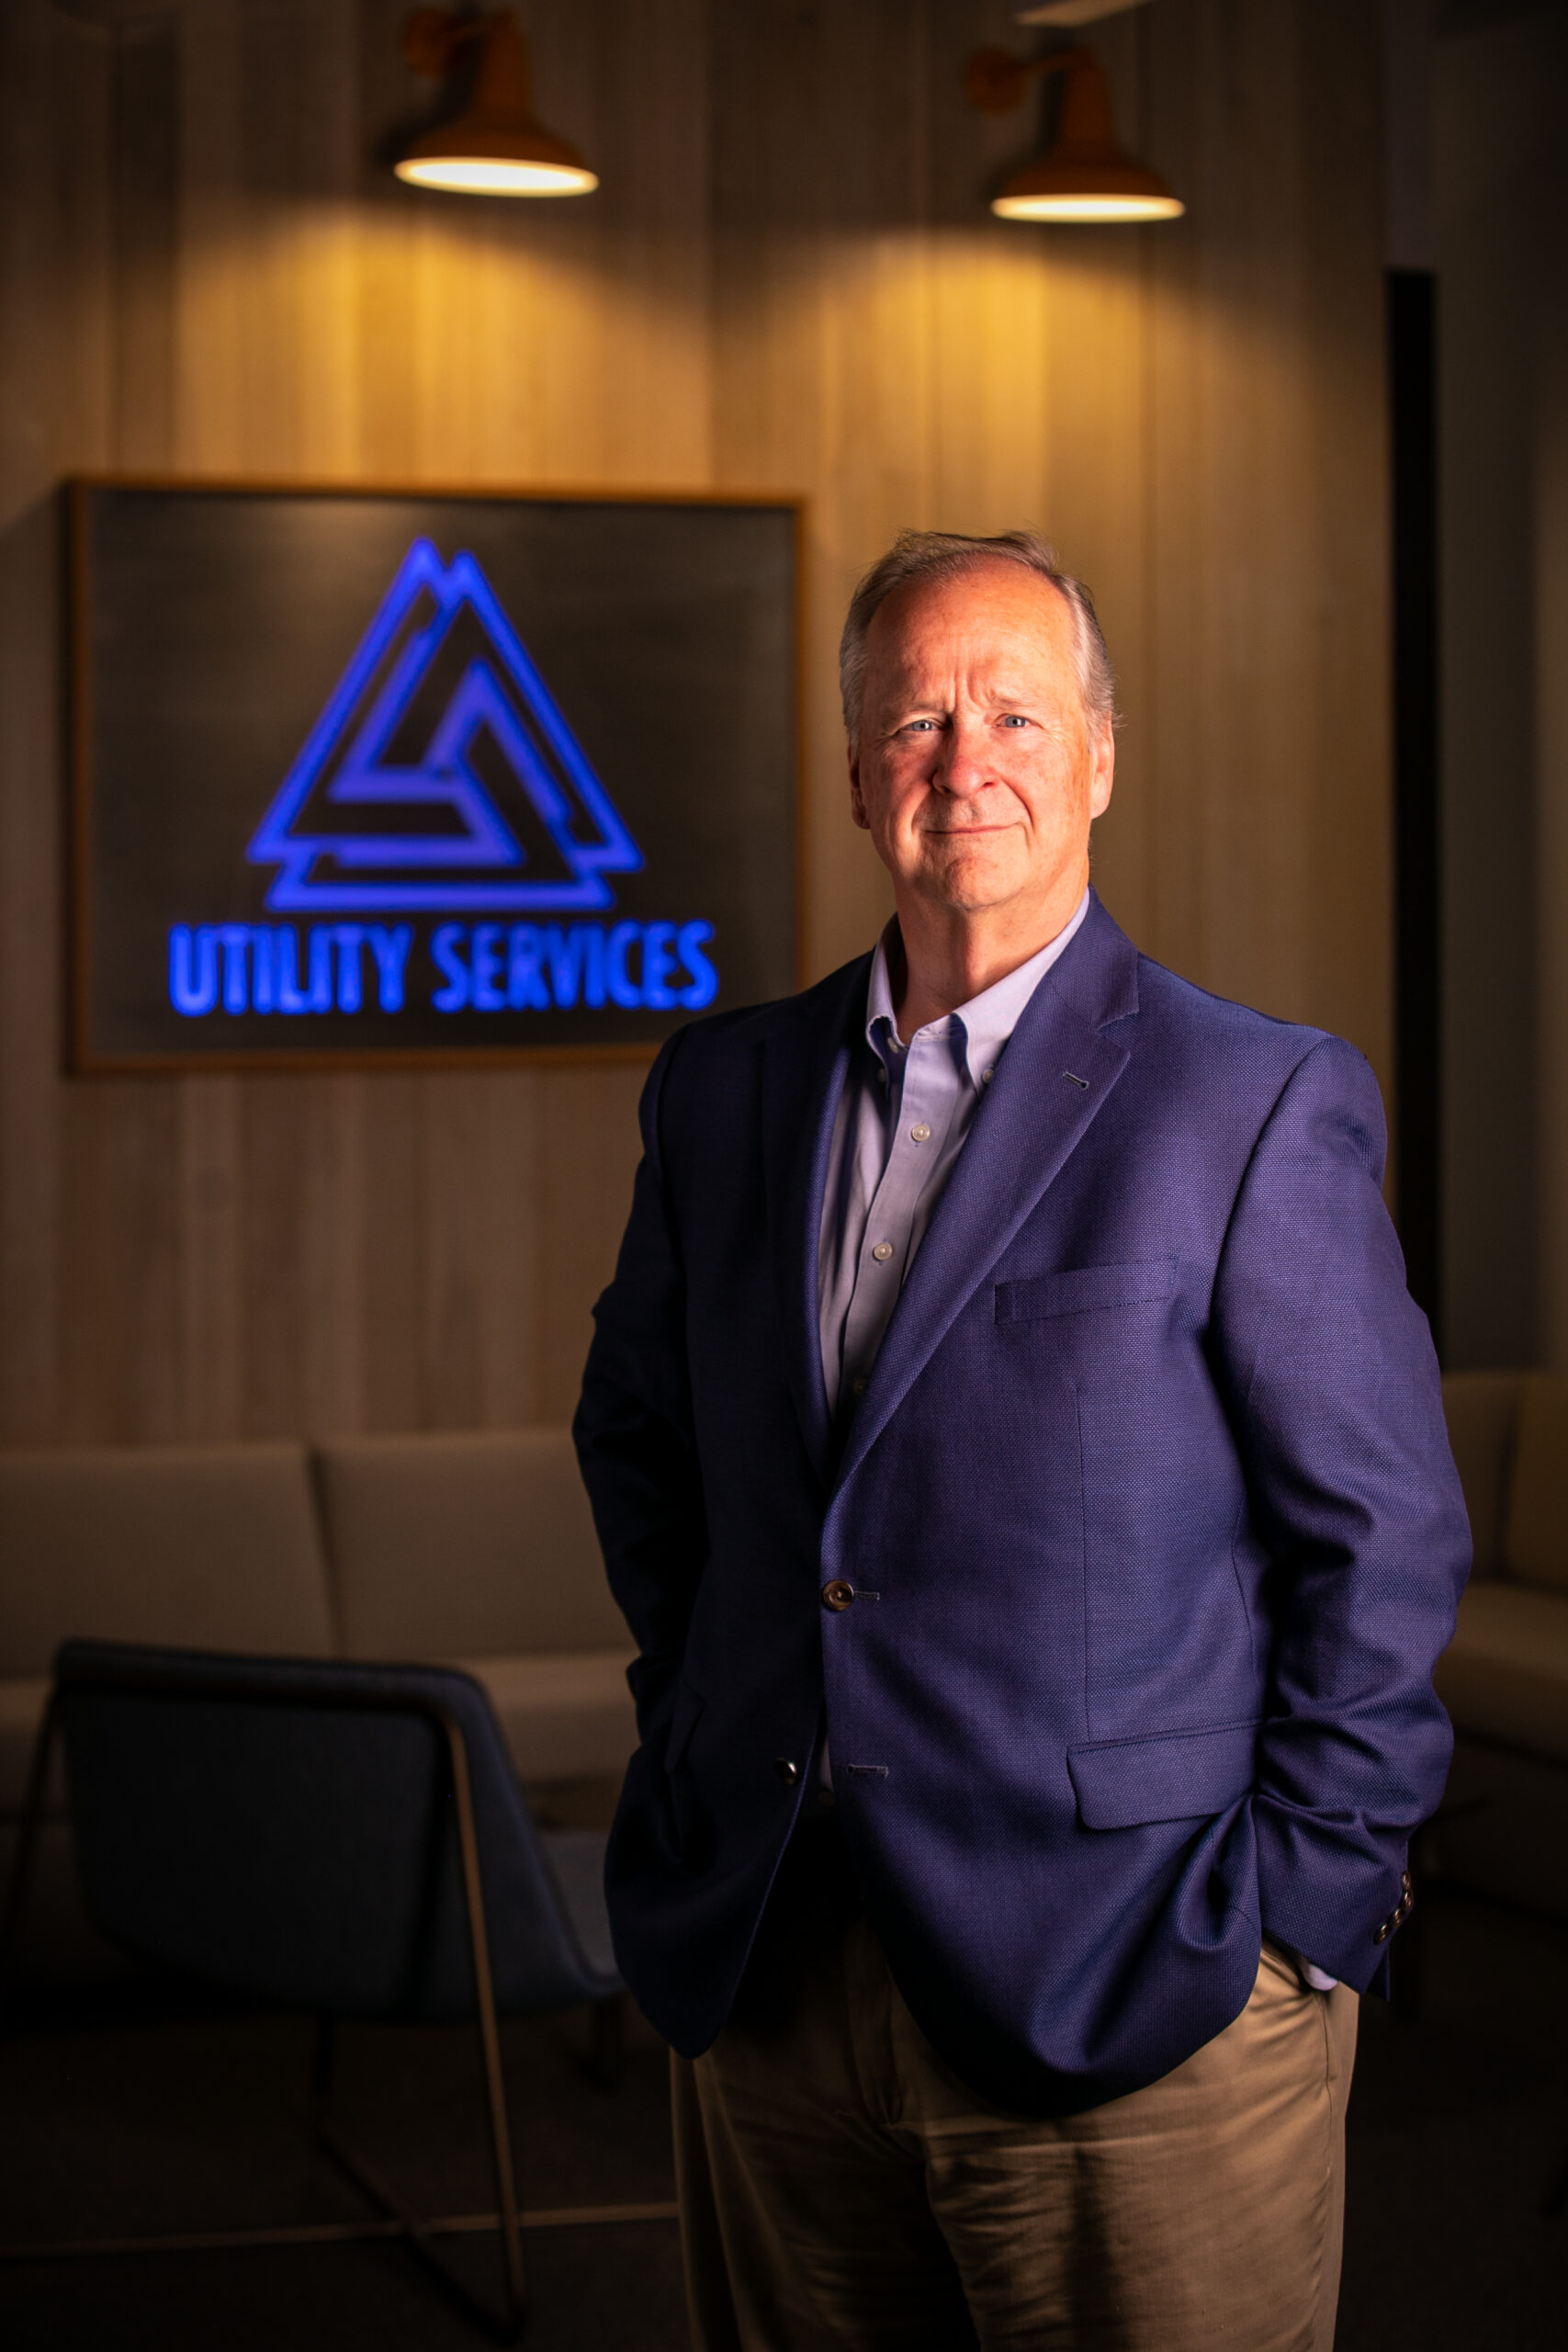 Brian Evans-Mongeon - Utility Services